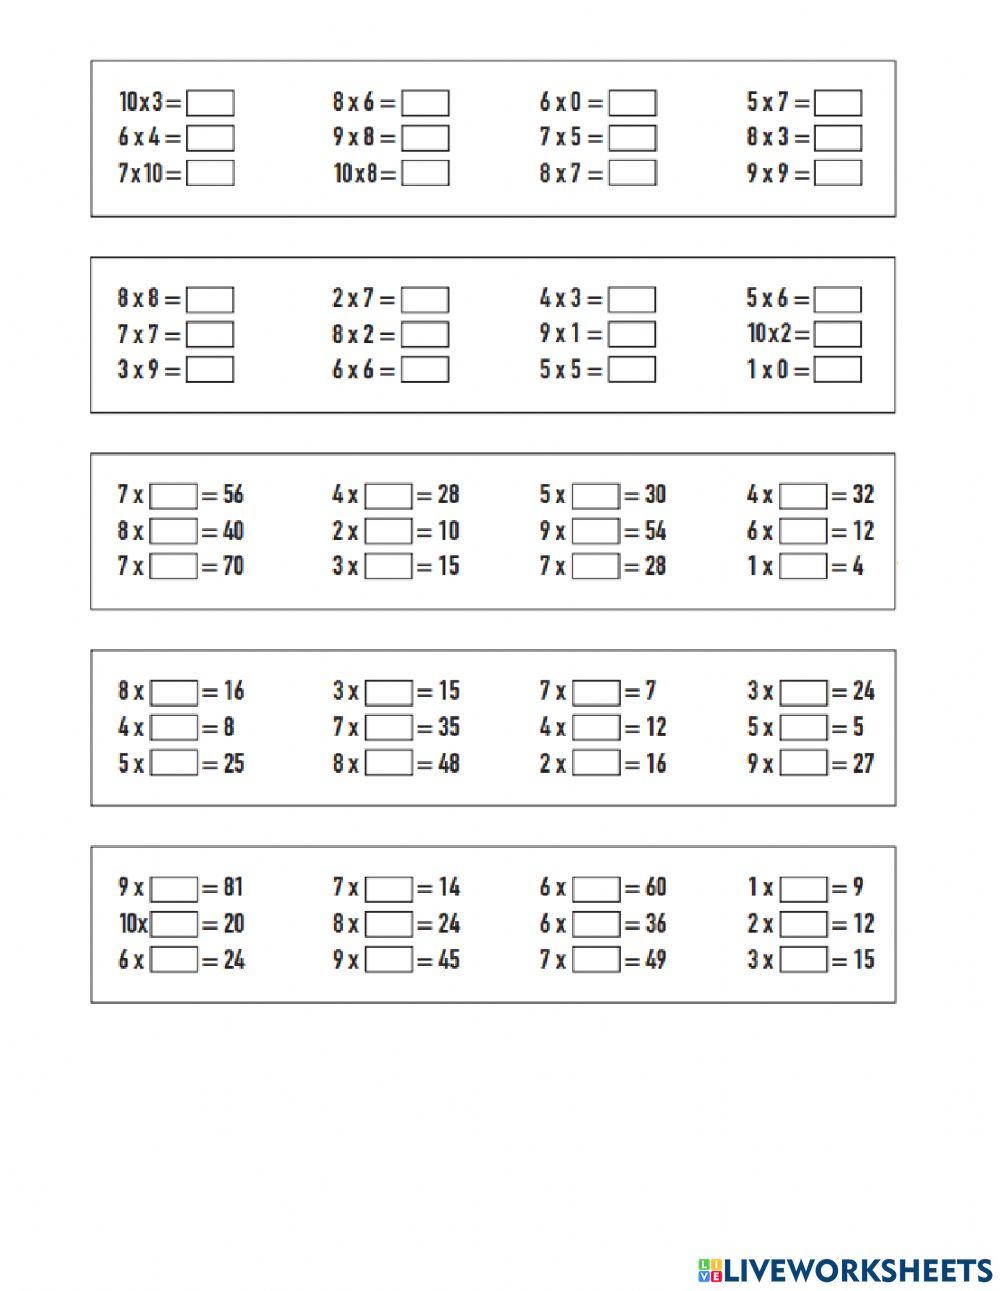 Quiz tablas de multiplicar interactive worksheet